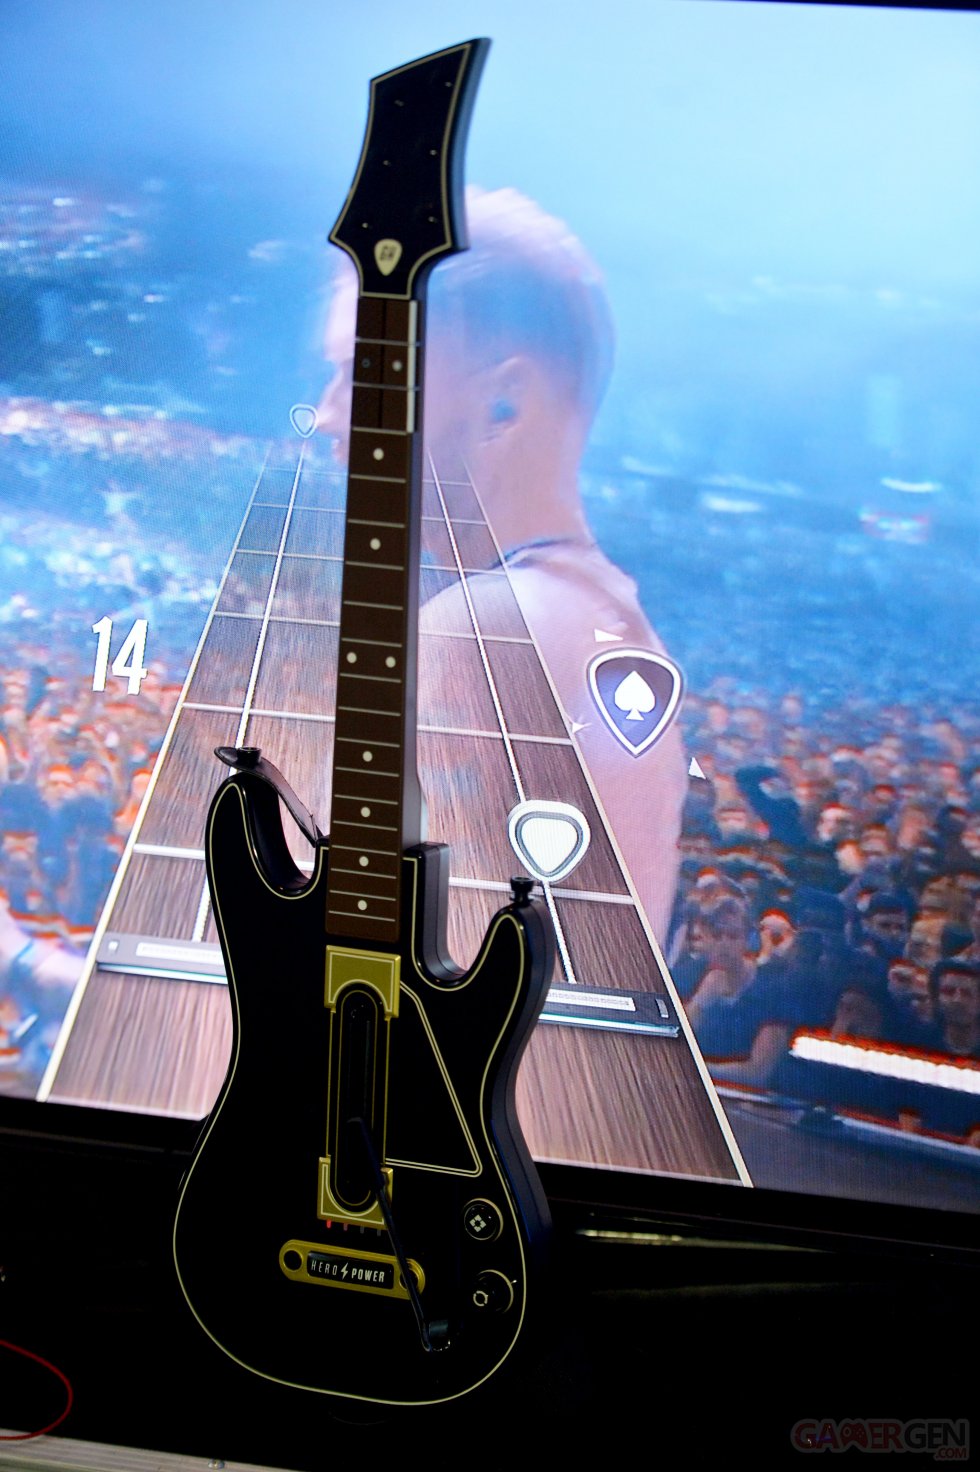 Guitar Hero Live Photo prss tour (4)